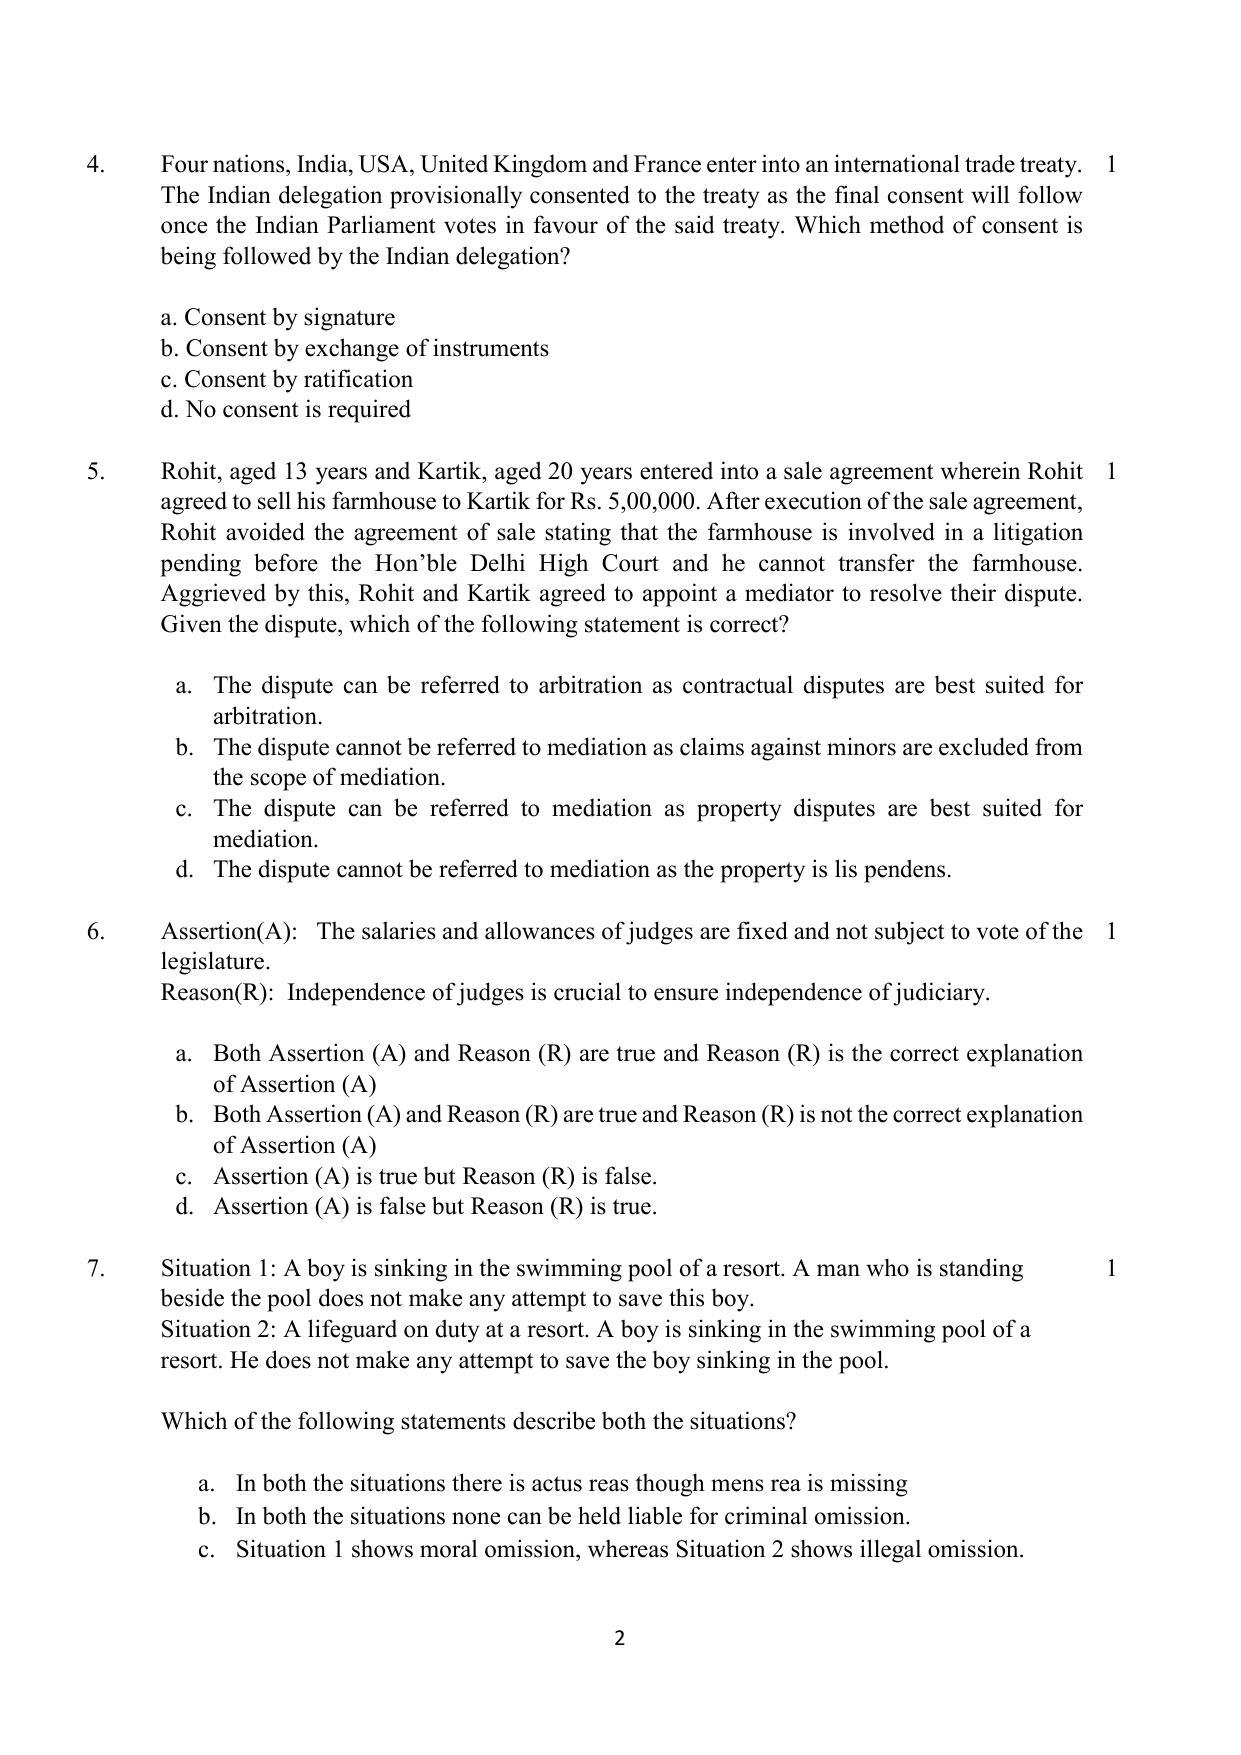 CBSE Class 12 Legal Studies Sample Paper 2023 - Page 2